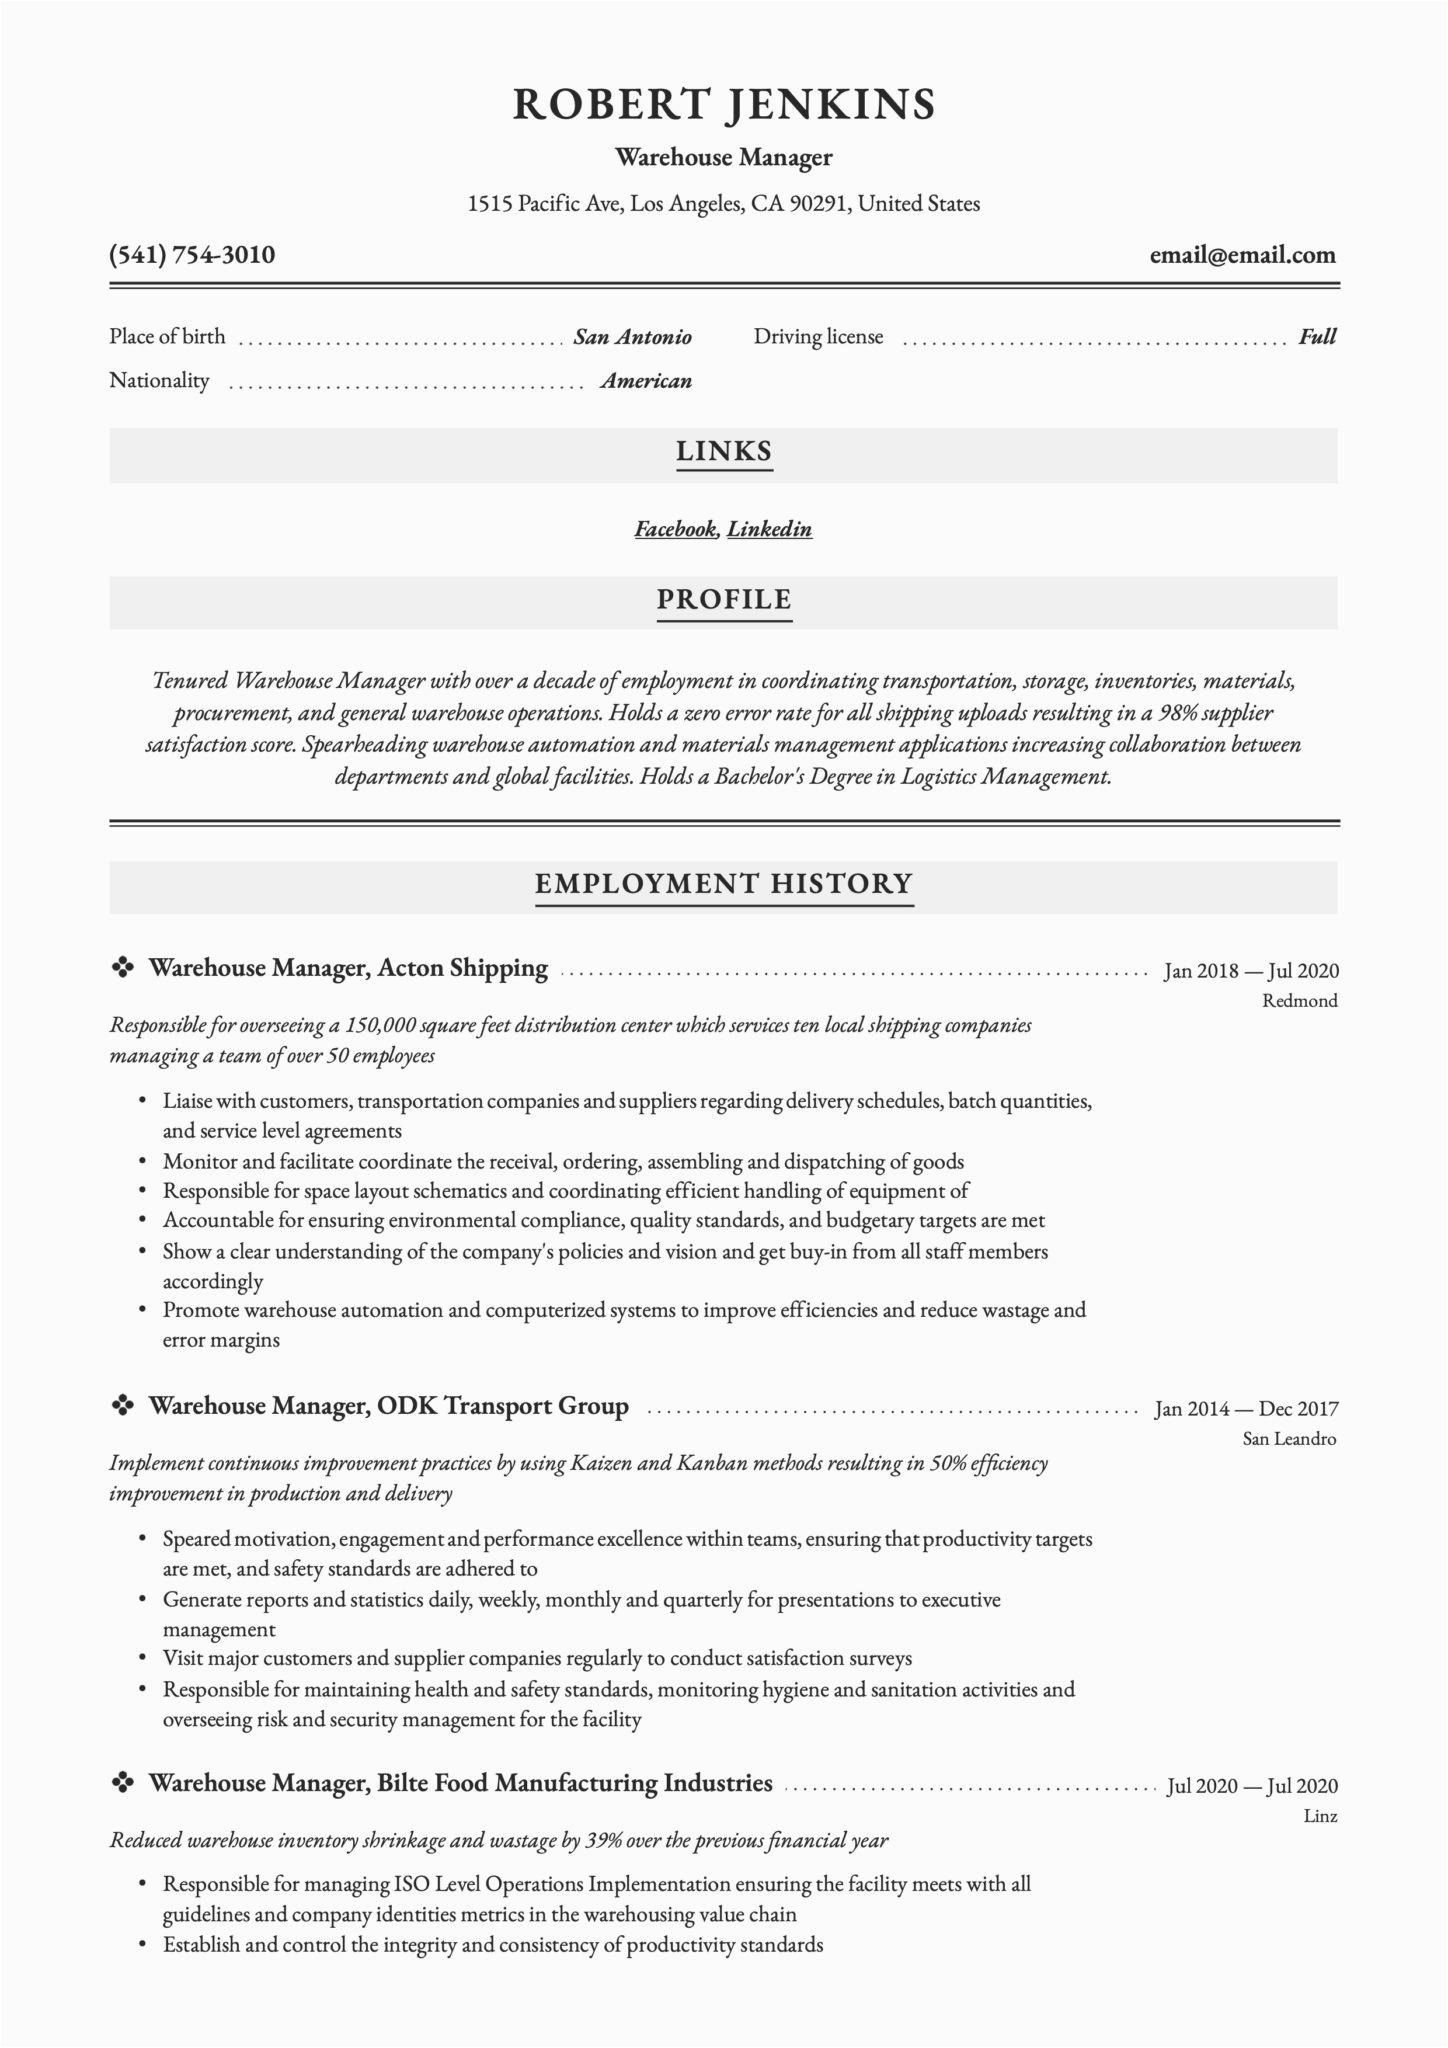 Job Qualificaton Warehouse Management Resume Samples Warehouse Manager Resume & Writing Guide